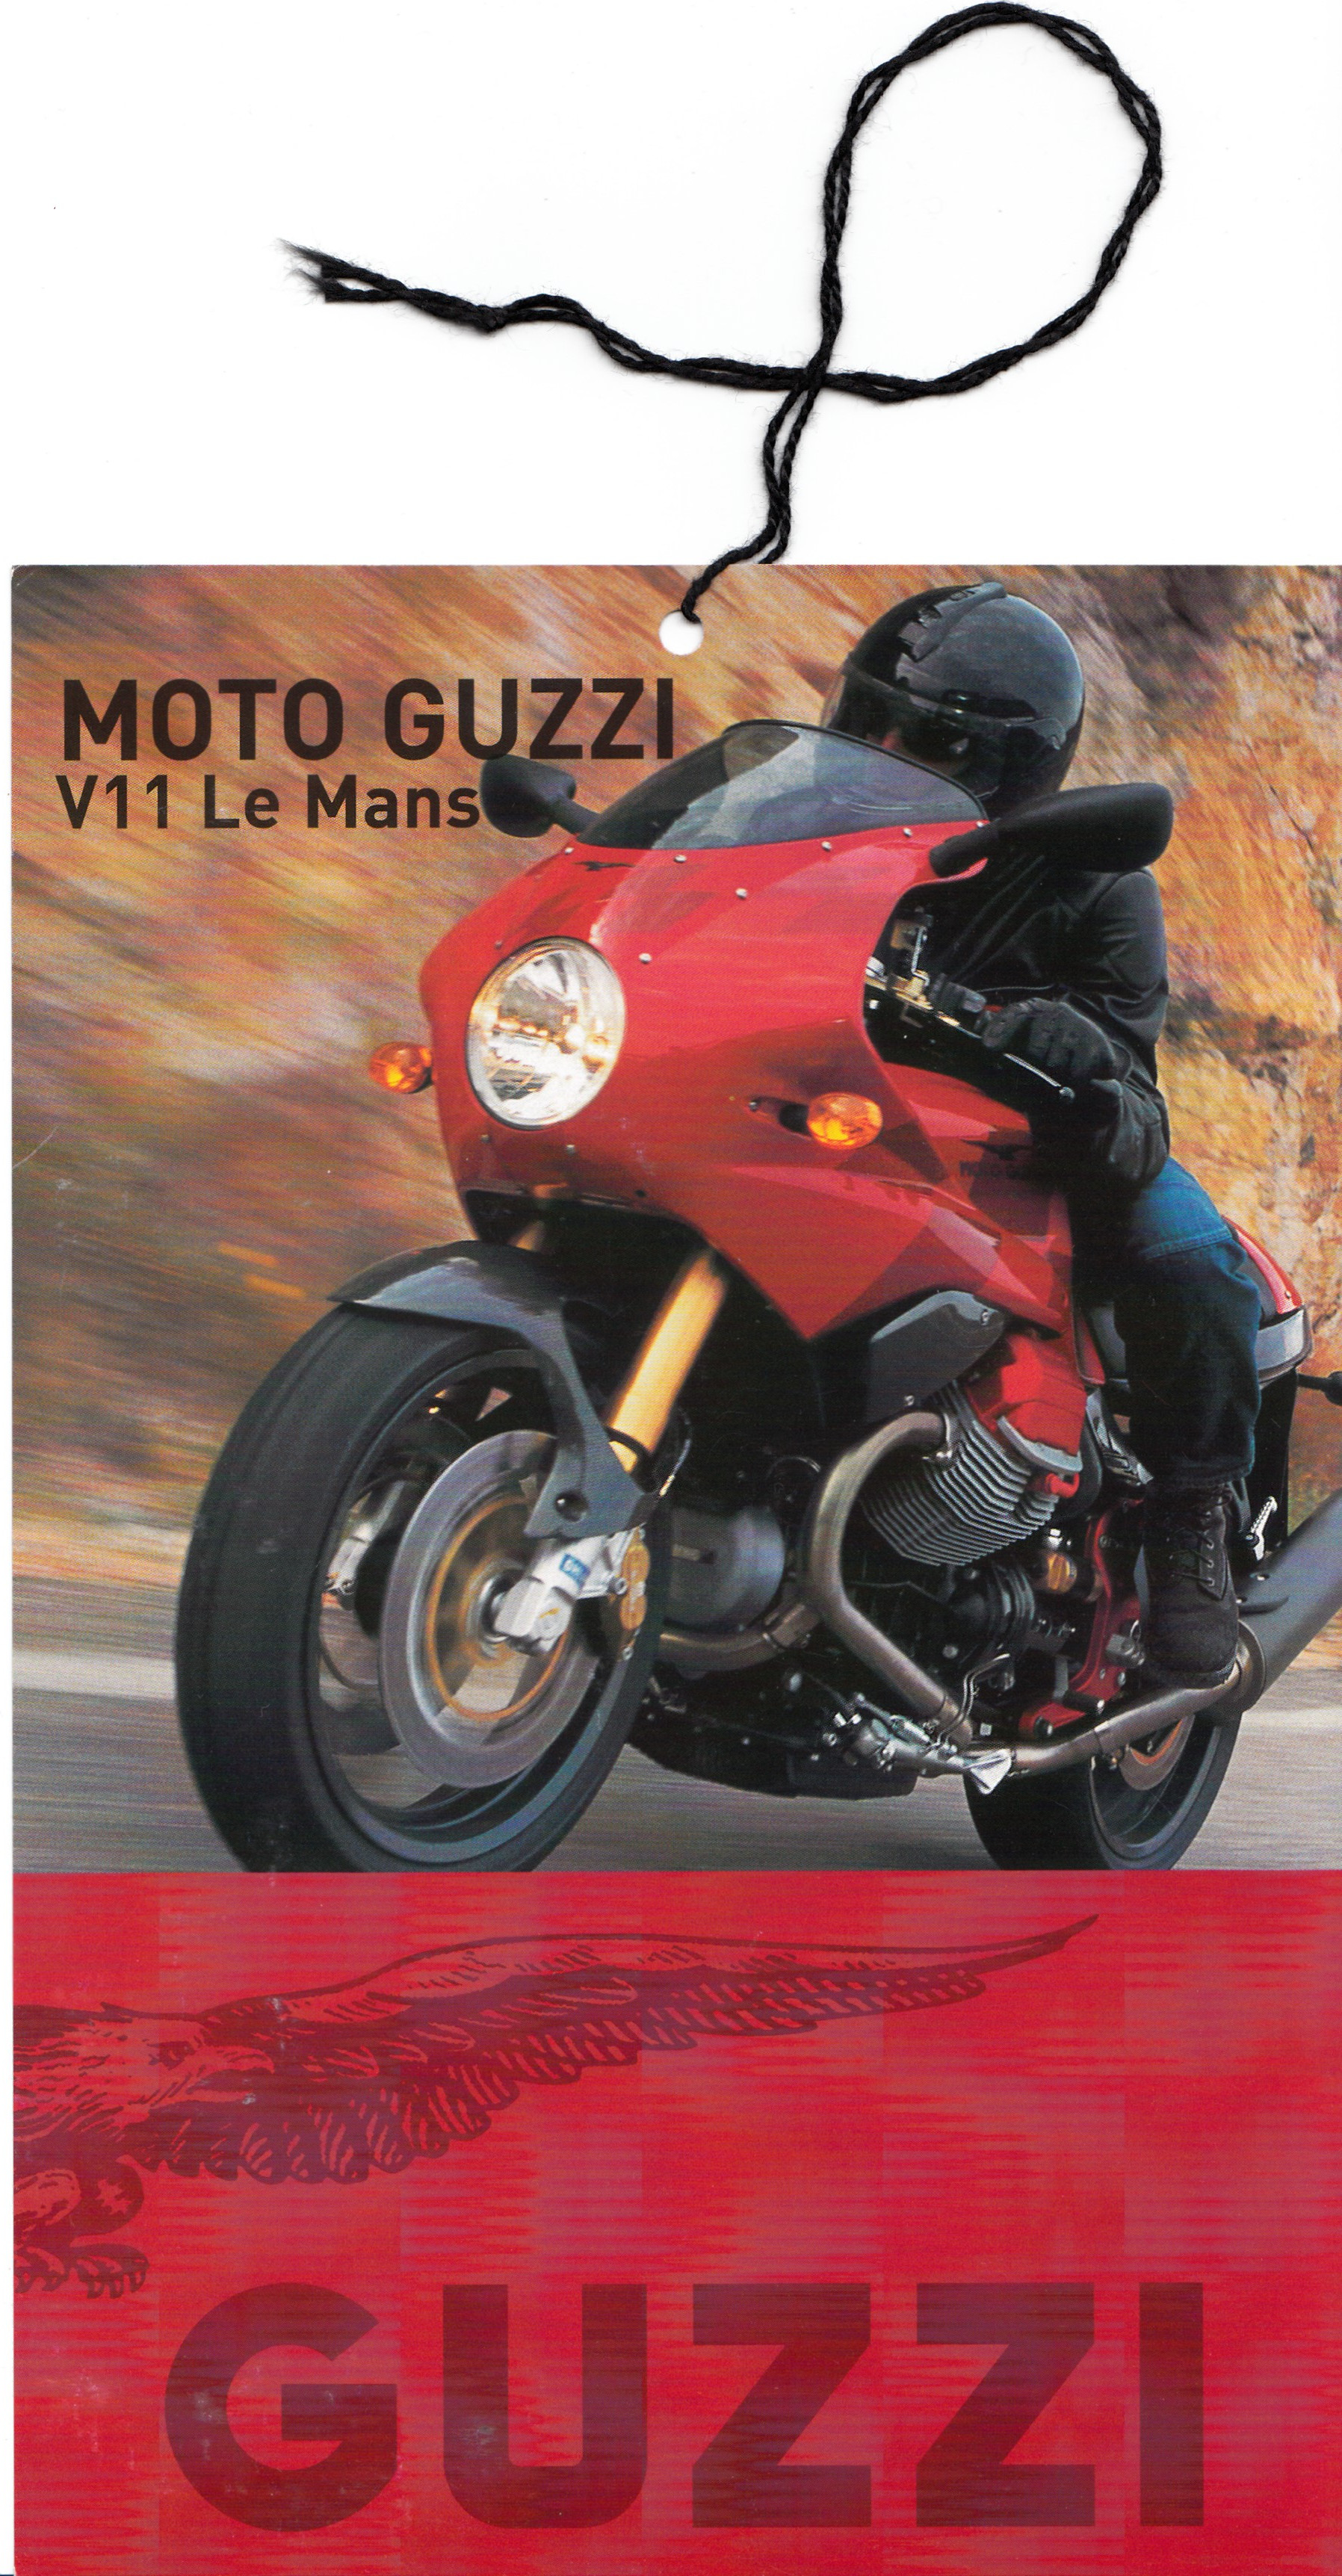 Tag - Moto Guzzi V11 Le Mans